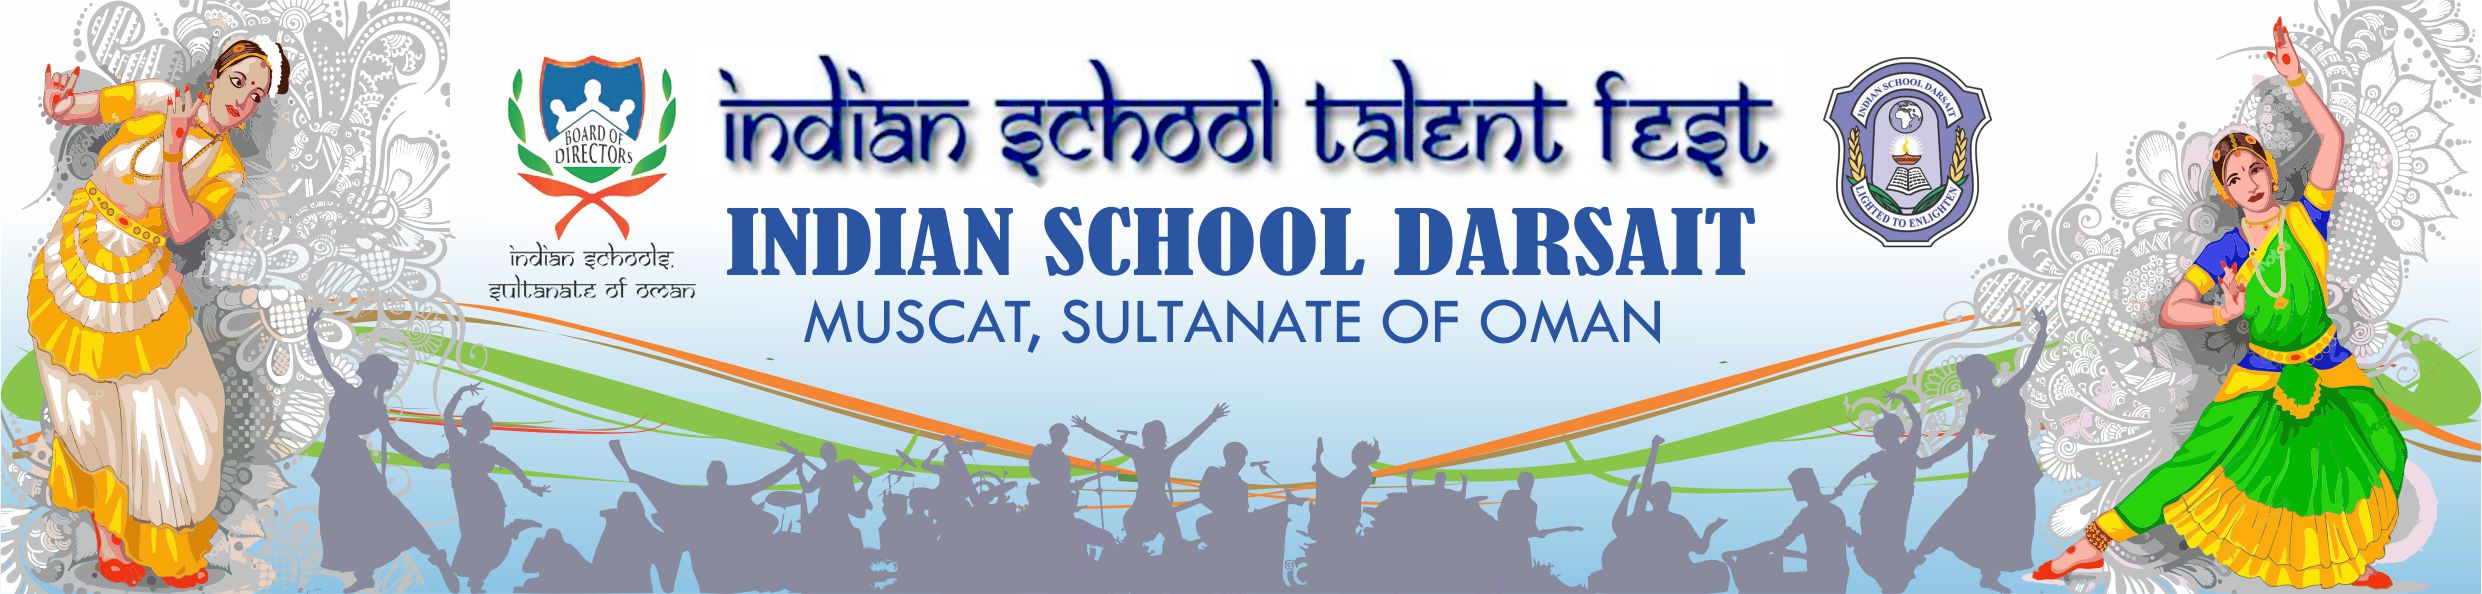 Indian School Talent Fest